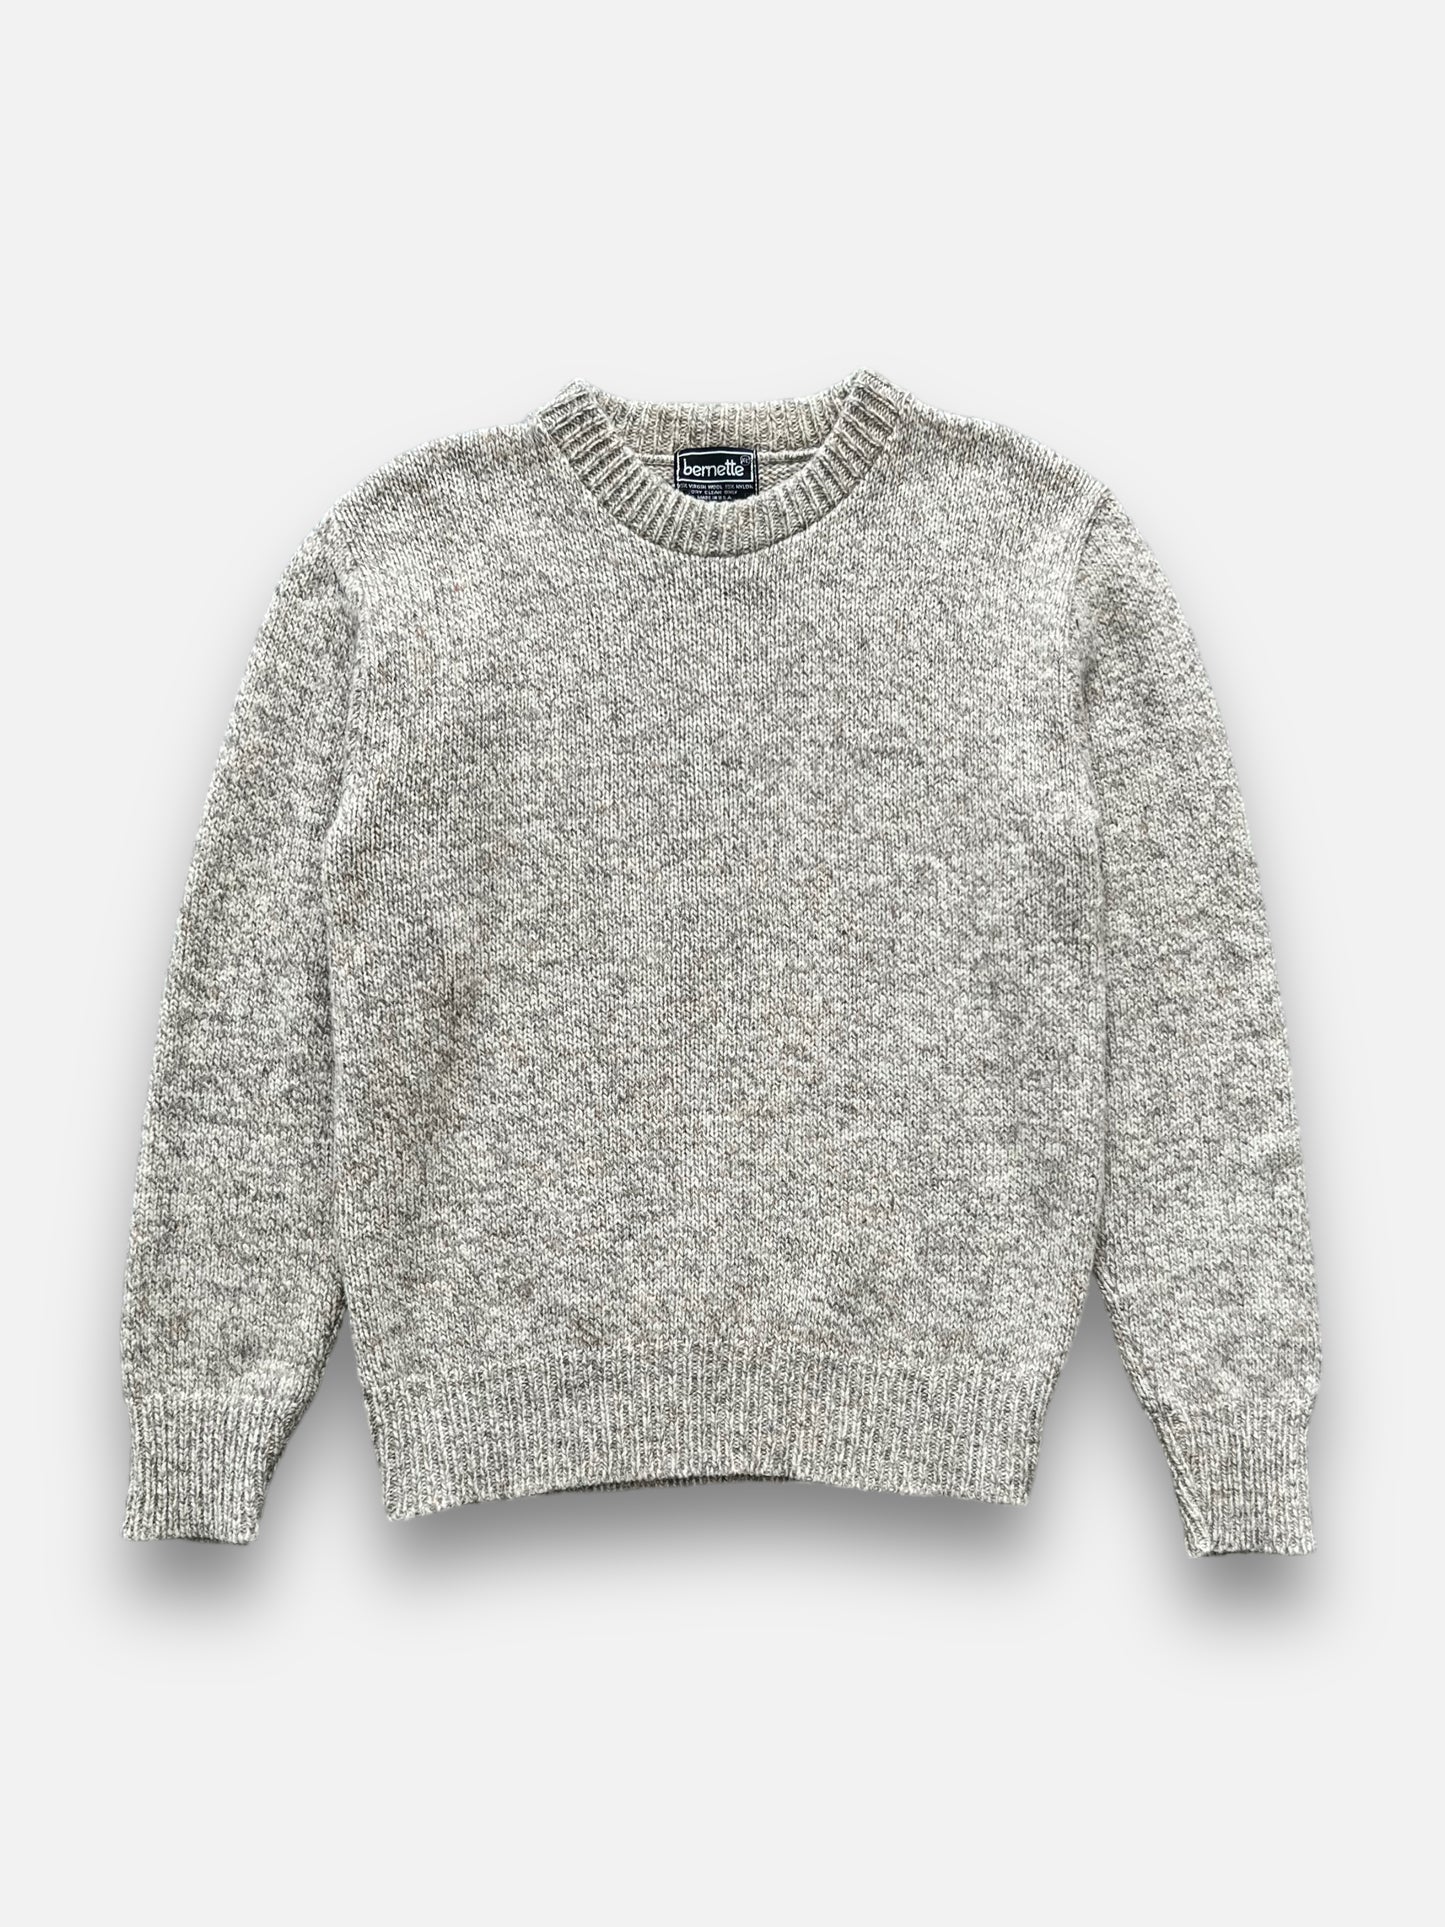 80s Bernette Sweater (M)